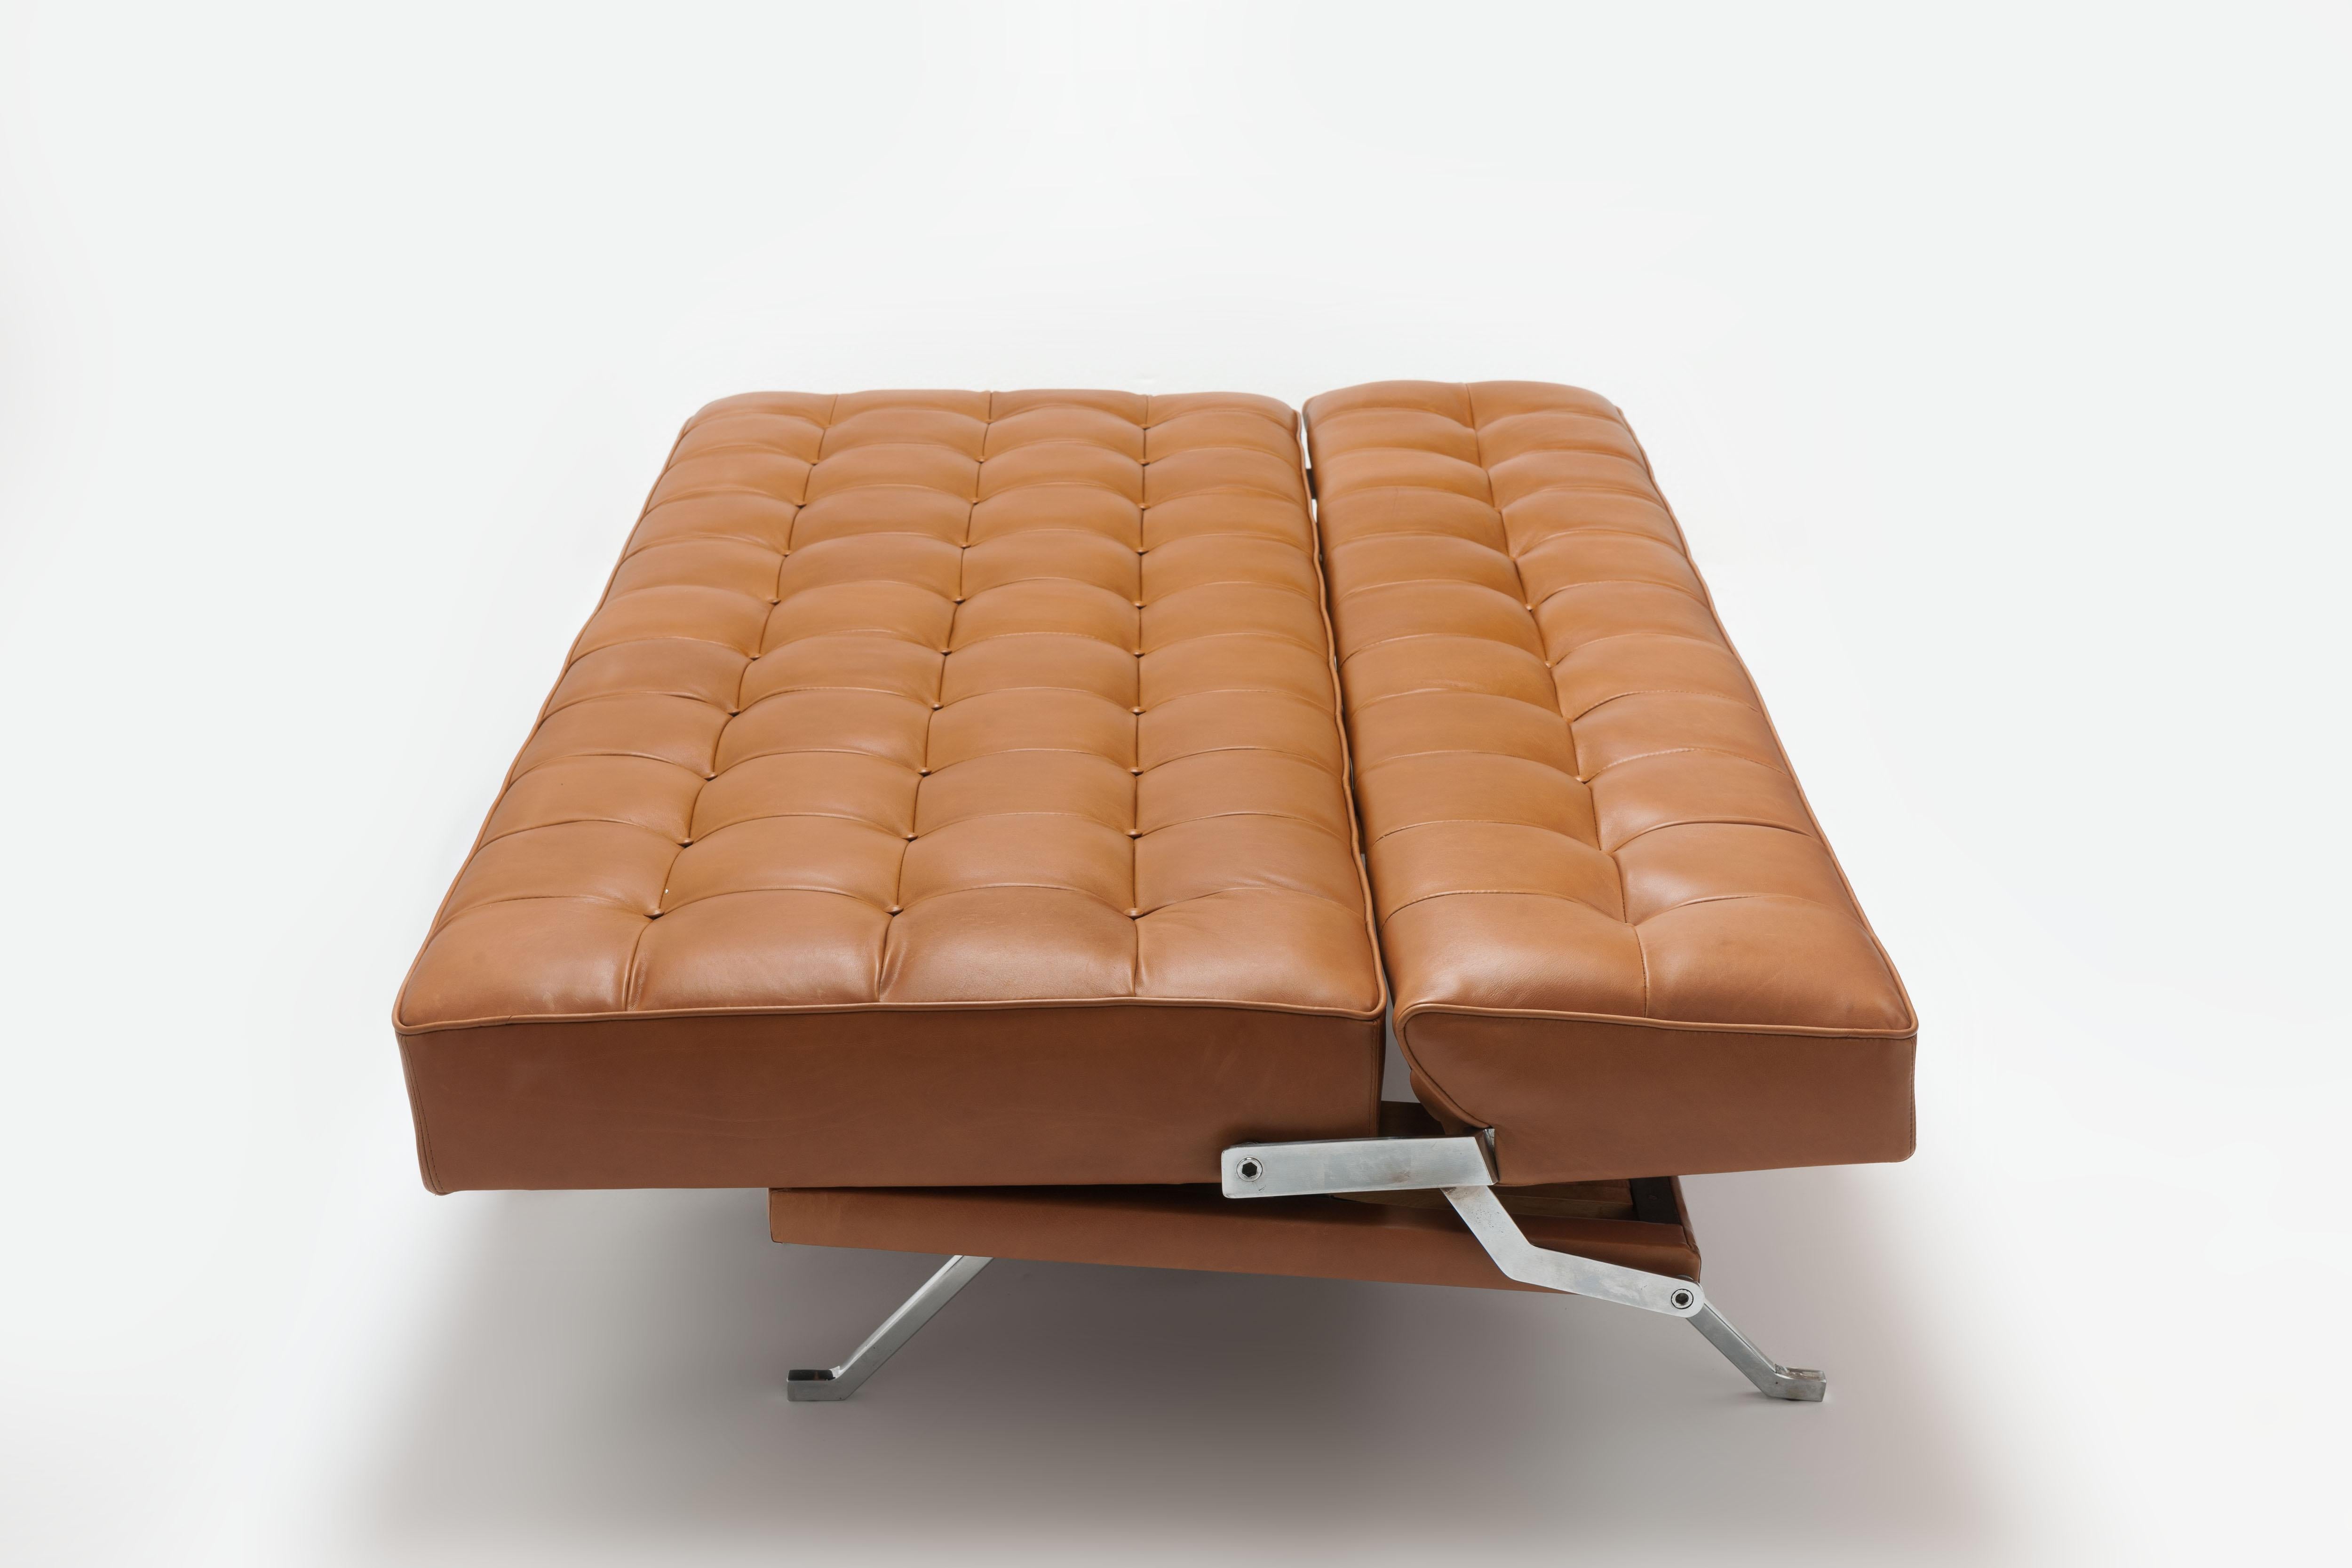 Steel Constanze Daybed & Sofa by Johannes Spalt for Franz Wittmann, Austria 